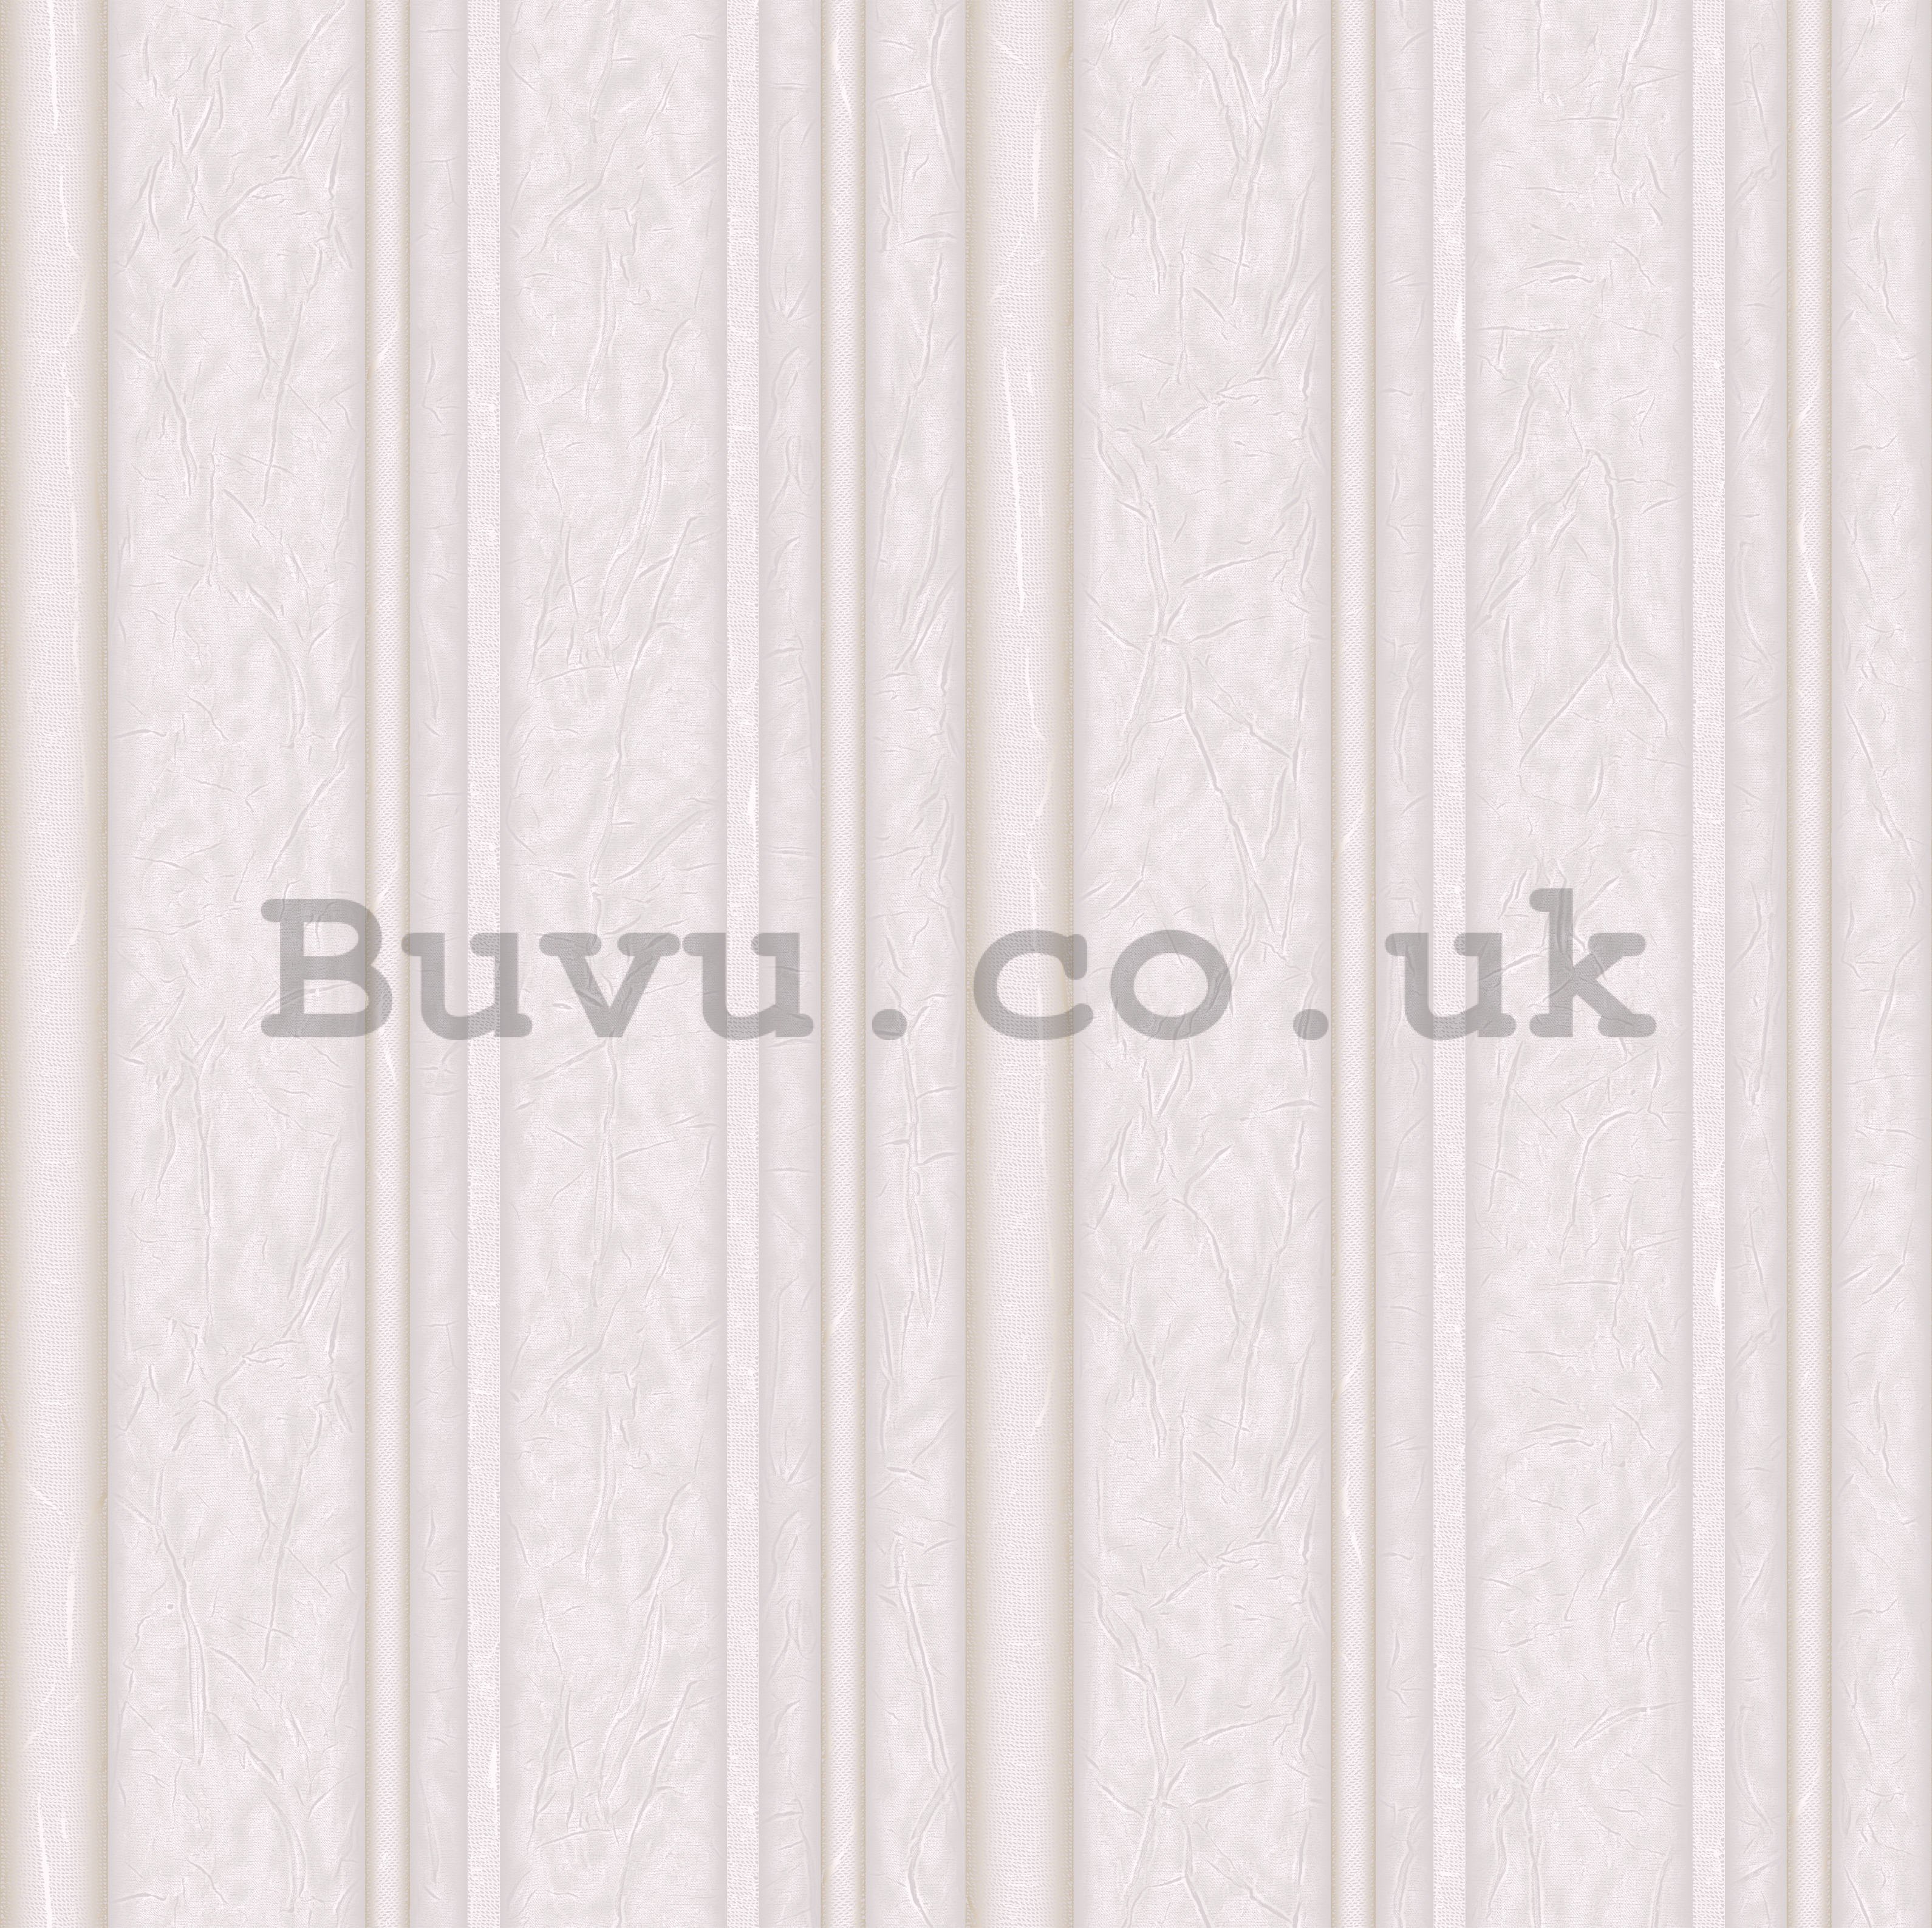 Vinyl wallpaper vertical stripes narrow beige gray